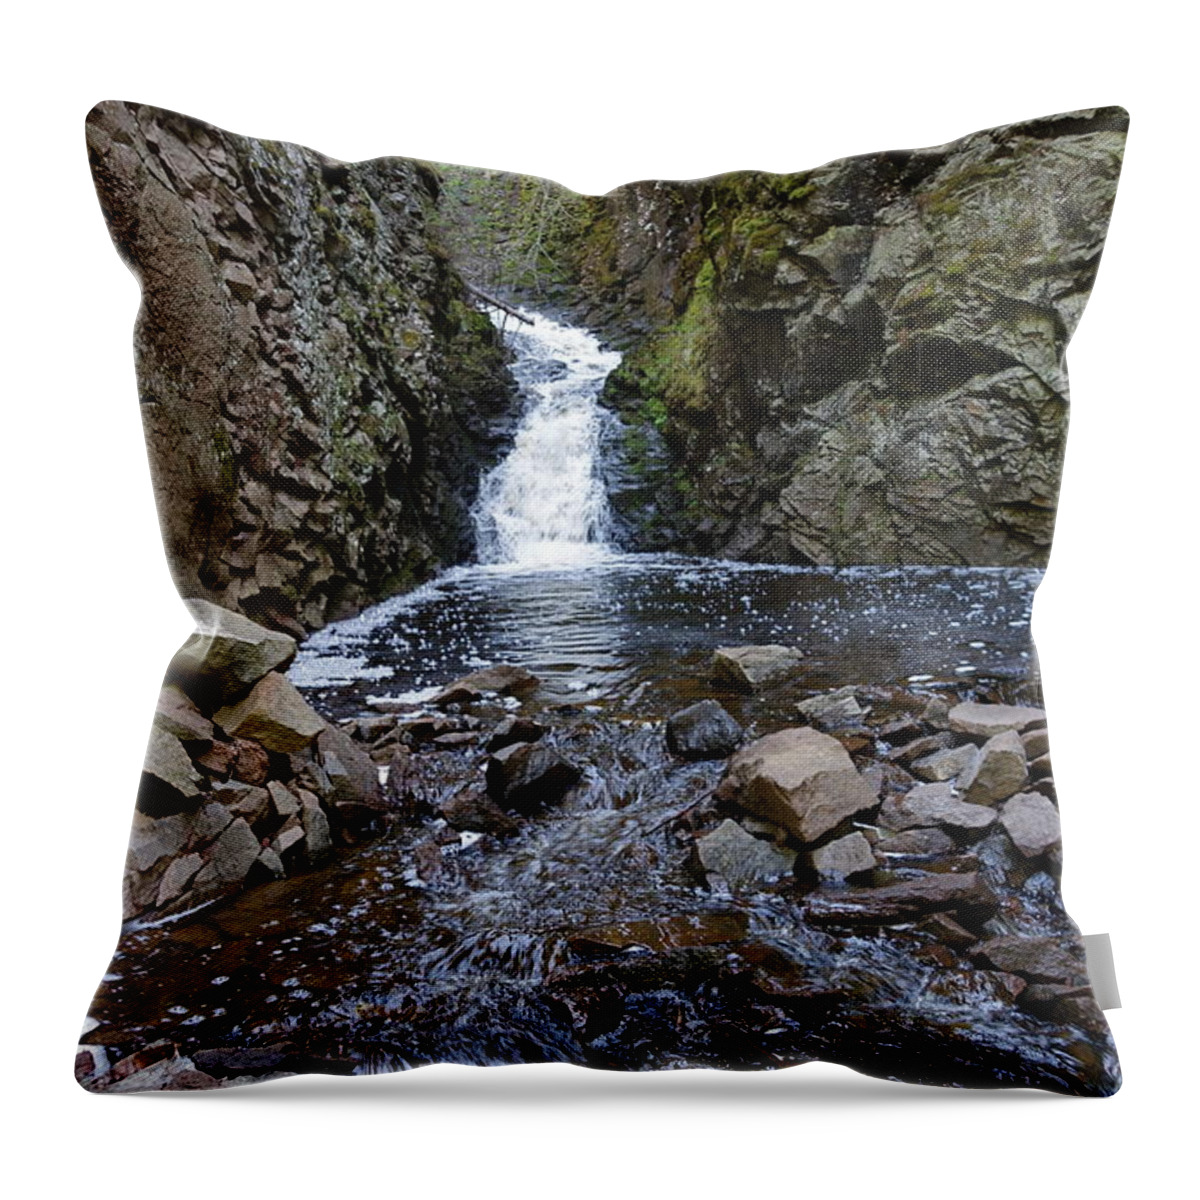 Kugler's Creek Throw Pillow featuring the photograph Lower Falls on Kugler's Creek #2 by Sandra Updyke